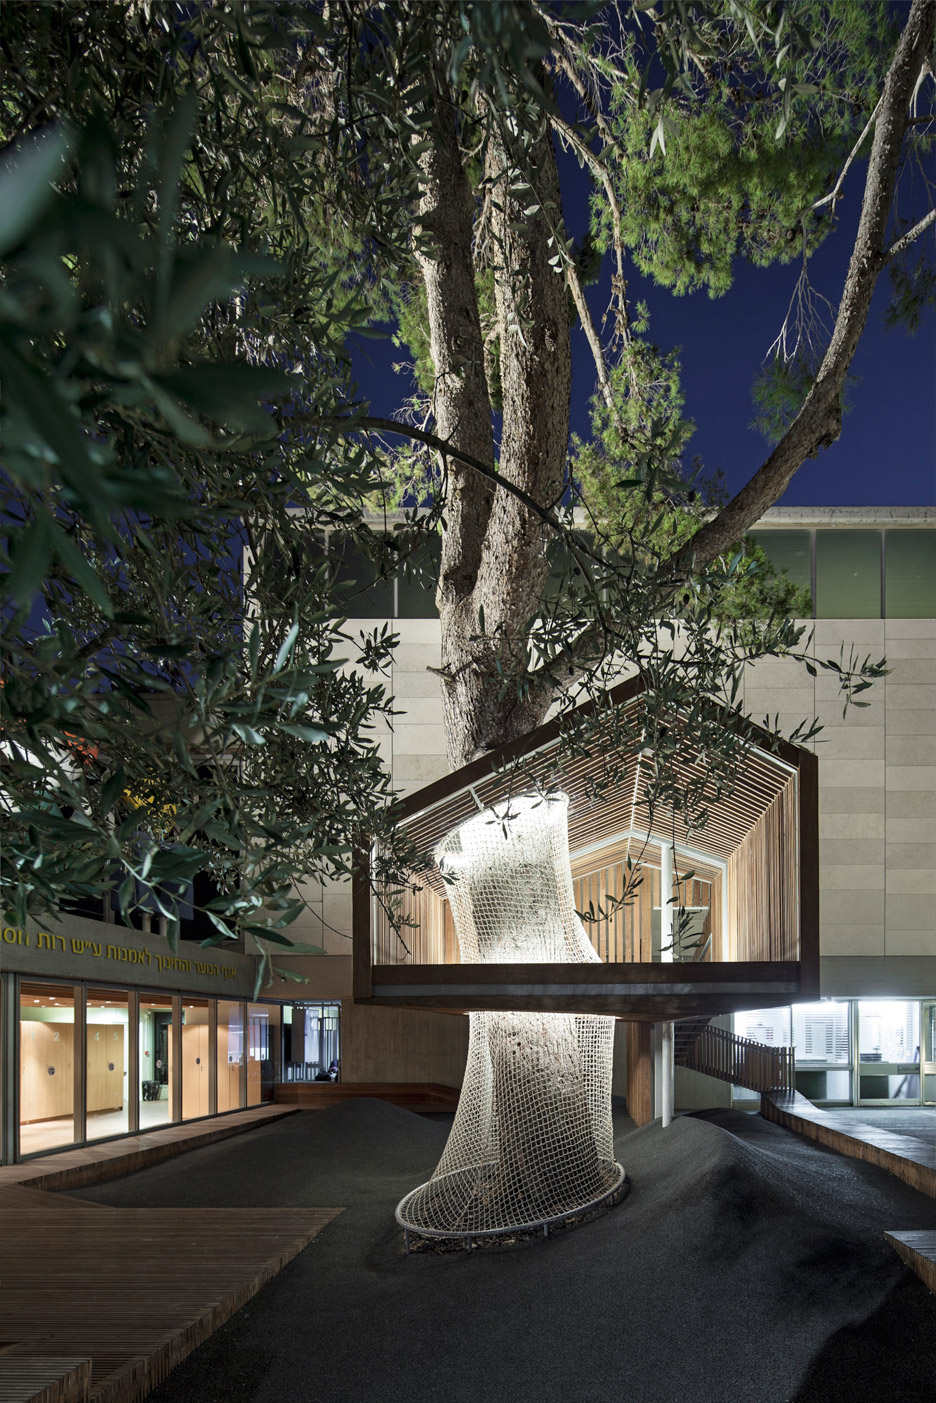 IMJ tree house by Ifat Finkelman and Deborah Warschawski